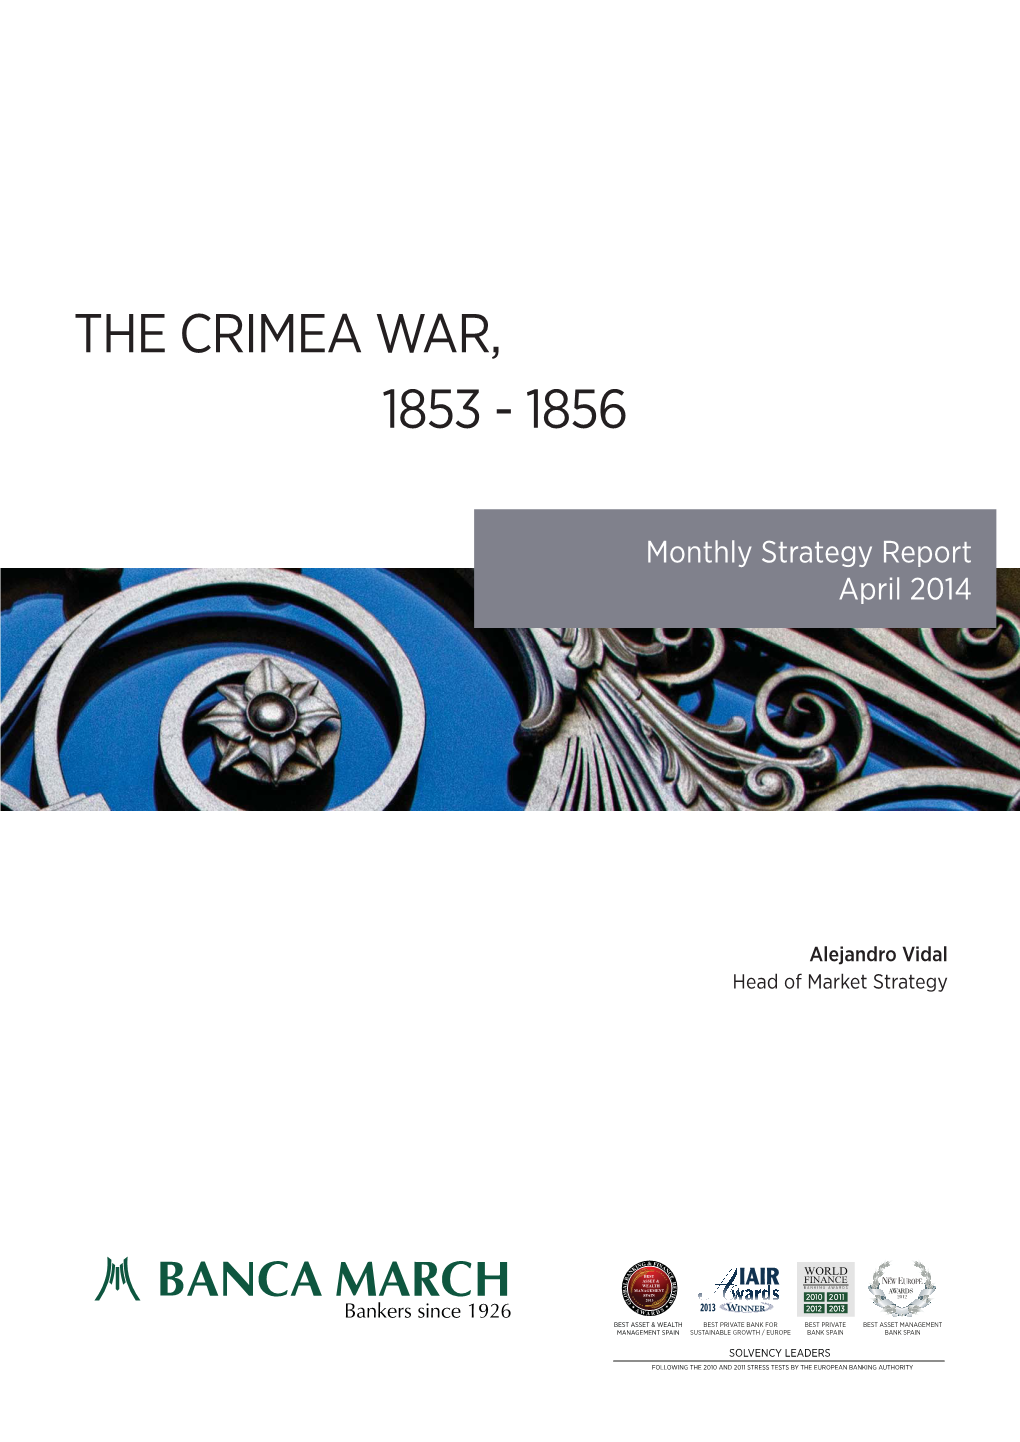 A Brief Historical Background: the Crimea War 1853